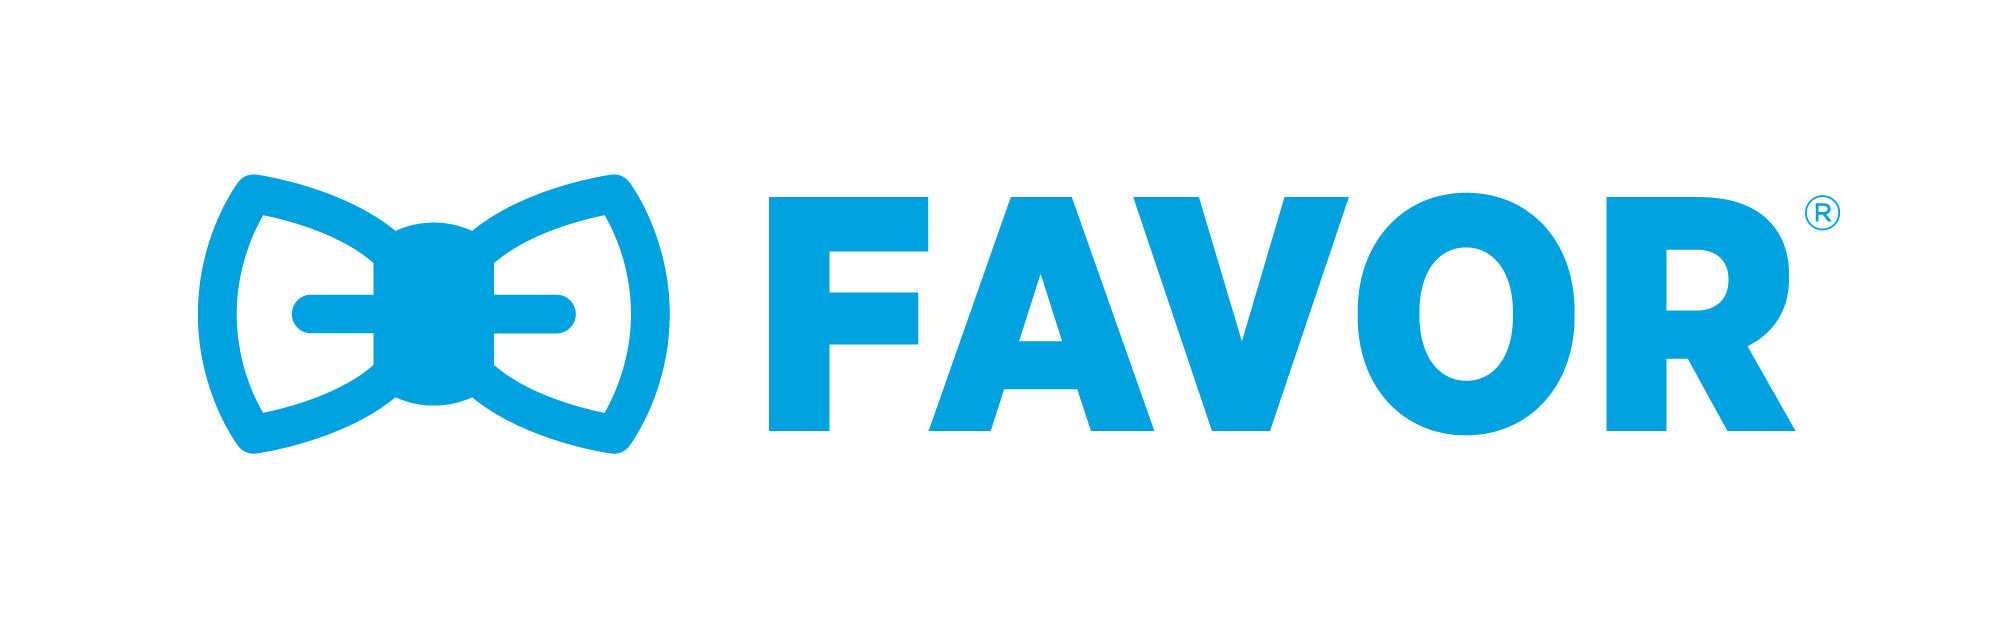 Favor Logo - Favor Press and Media Inquiries | Favor Delivery